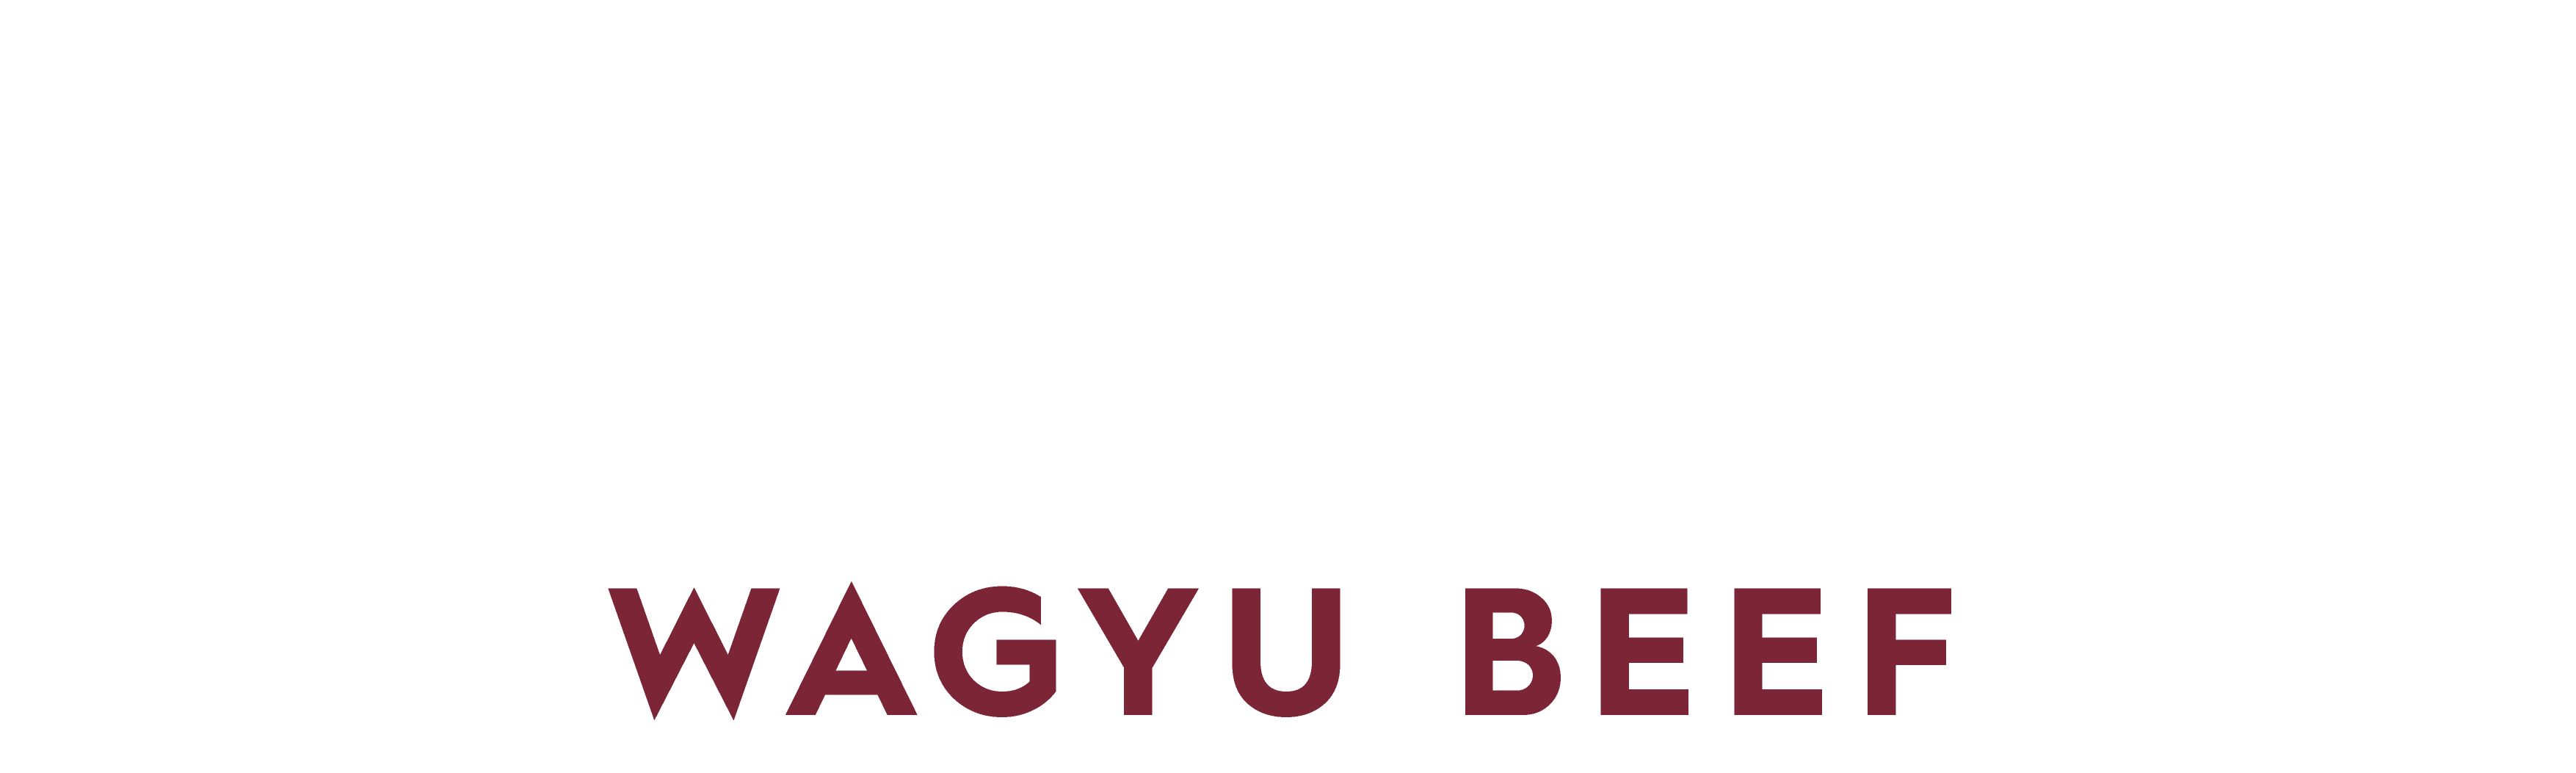 Diamantina Wagyu Beef logo